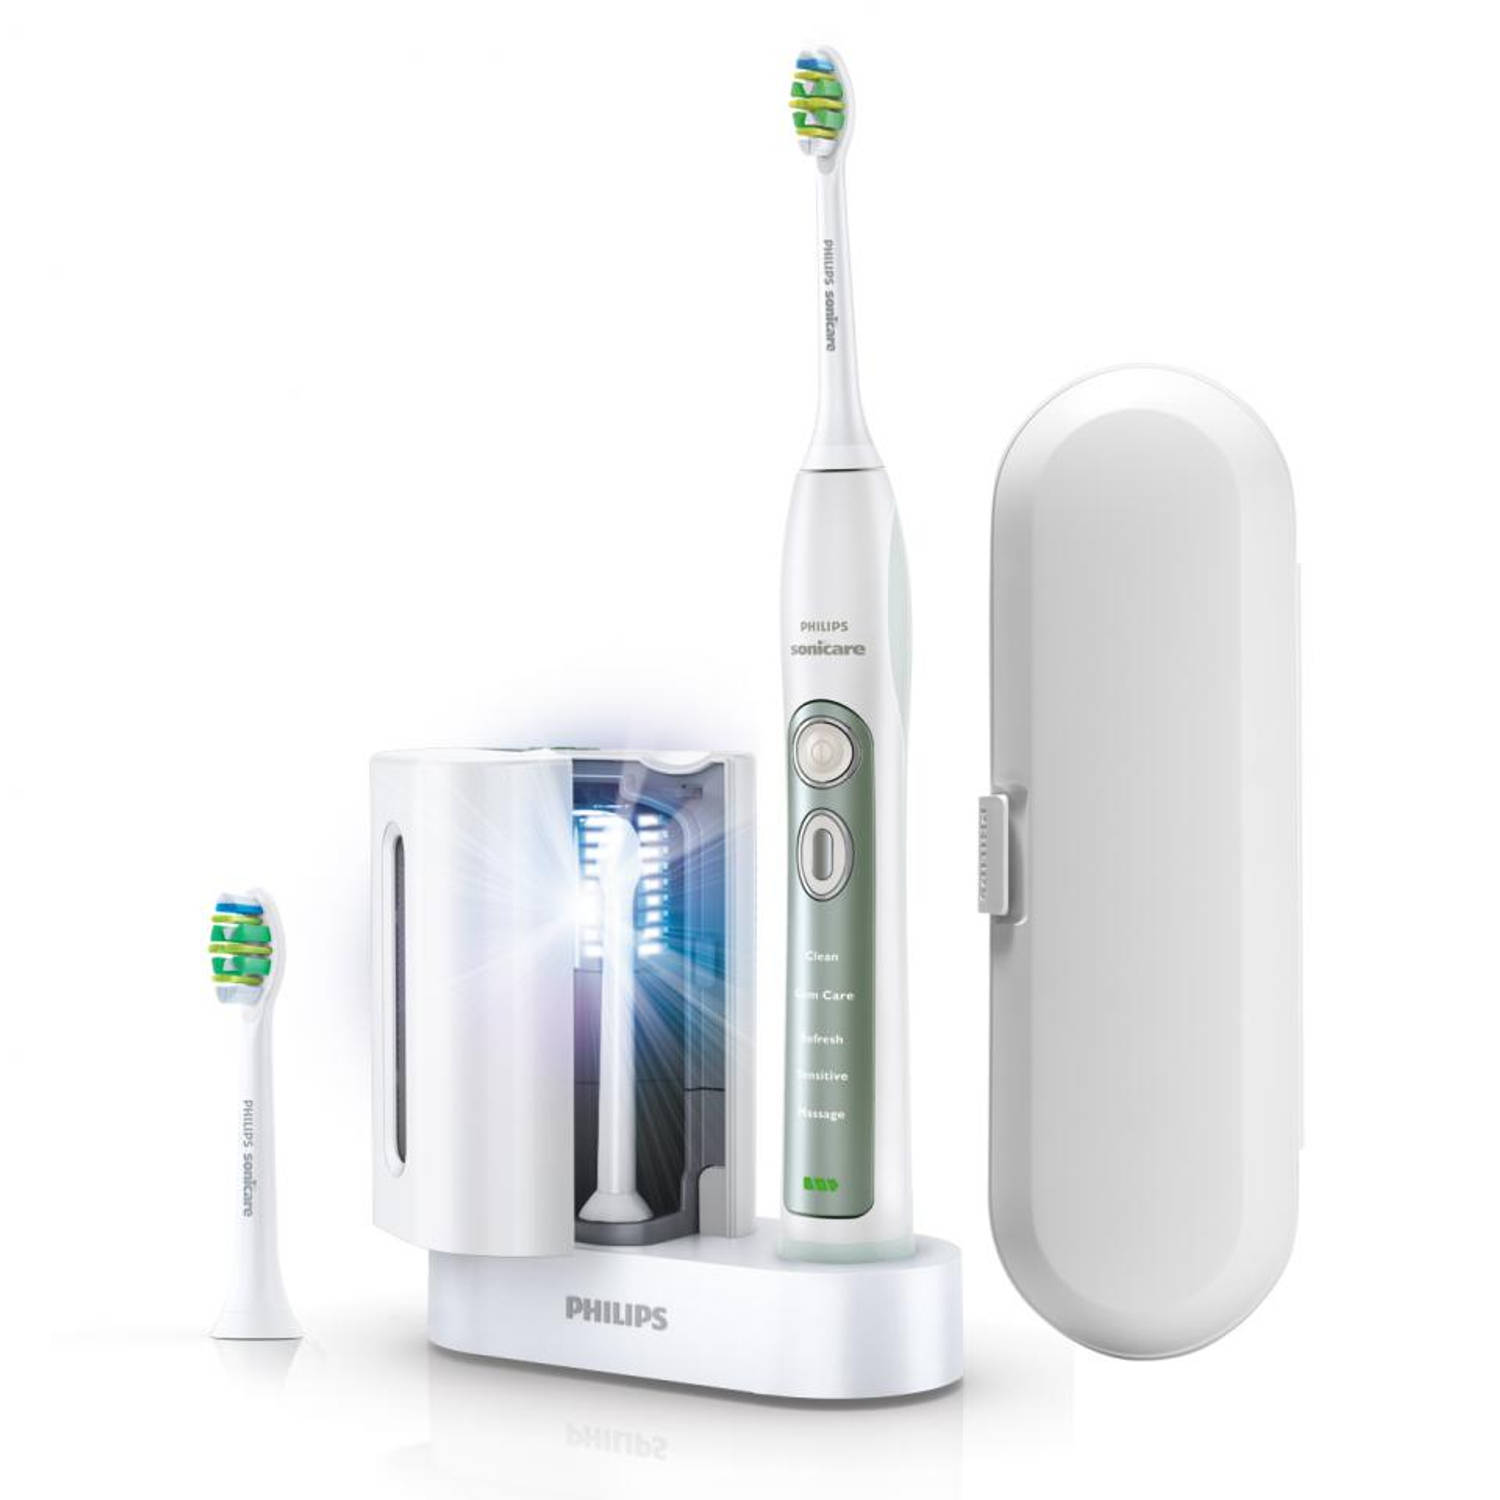 Sonicare elektrische tandeborstel Flexcare + UV Sanitizer HX6972/03 - wit | Blokker